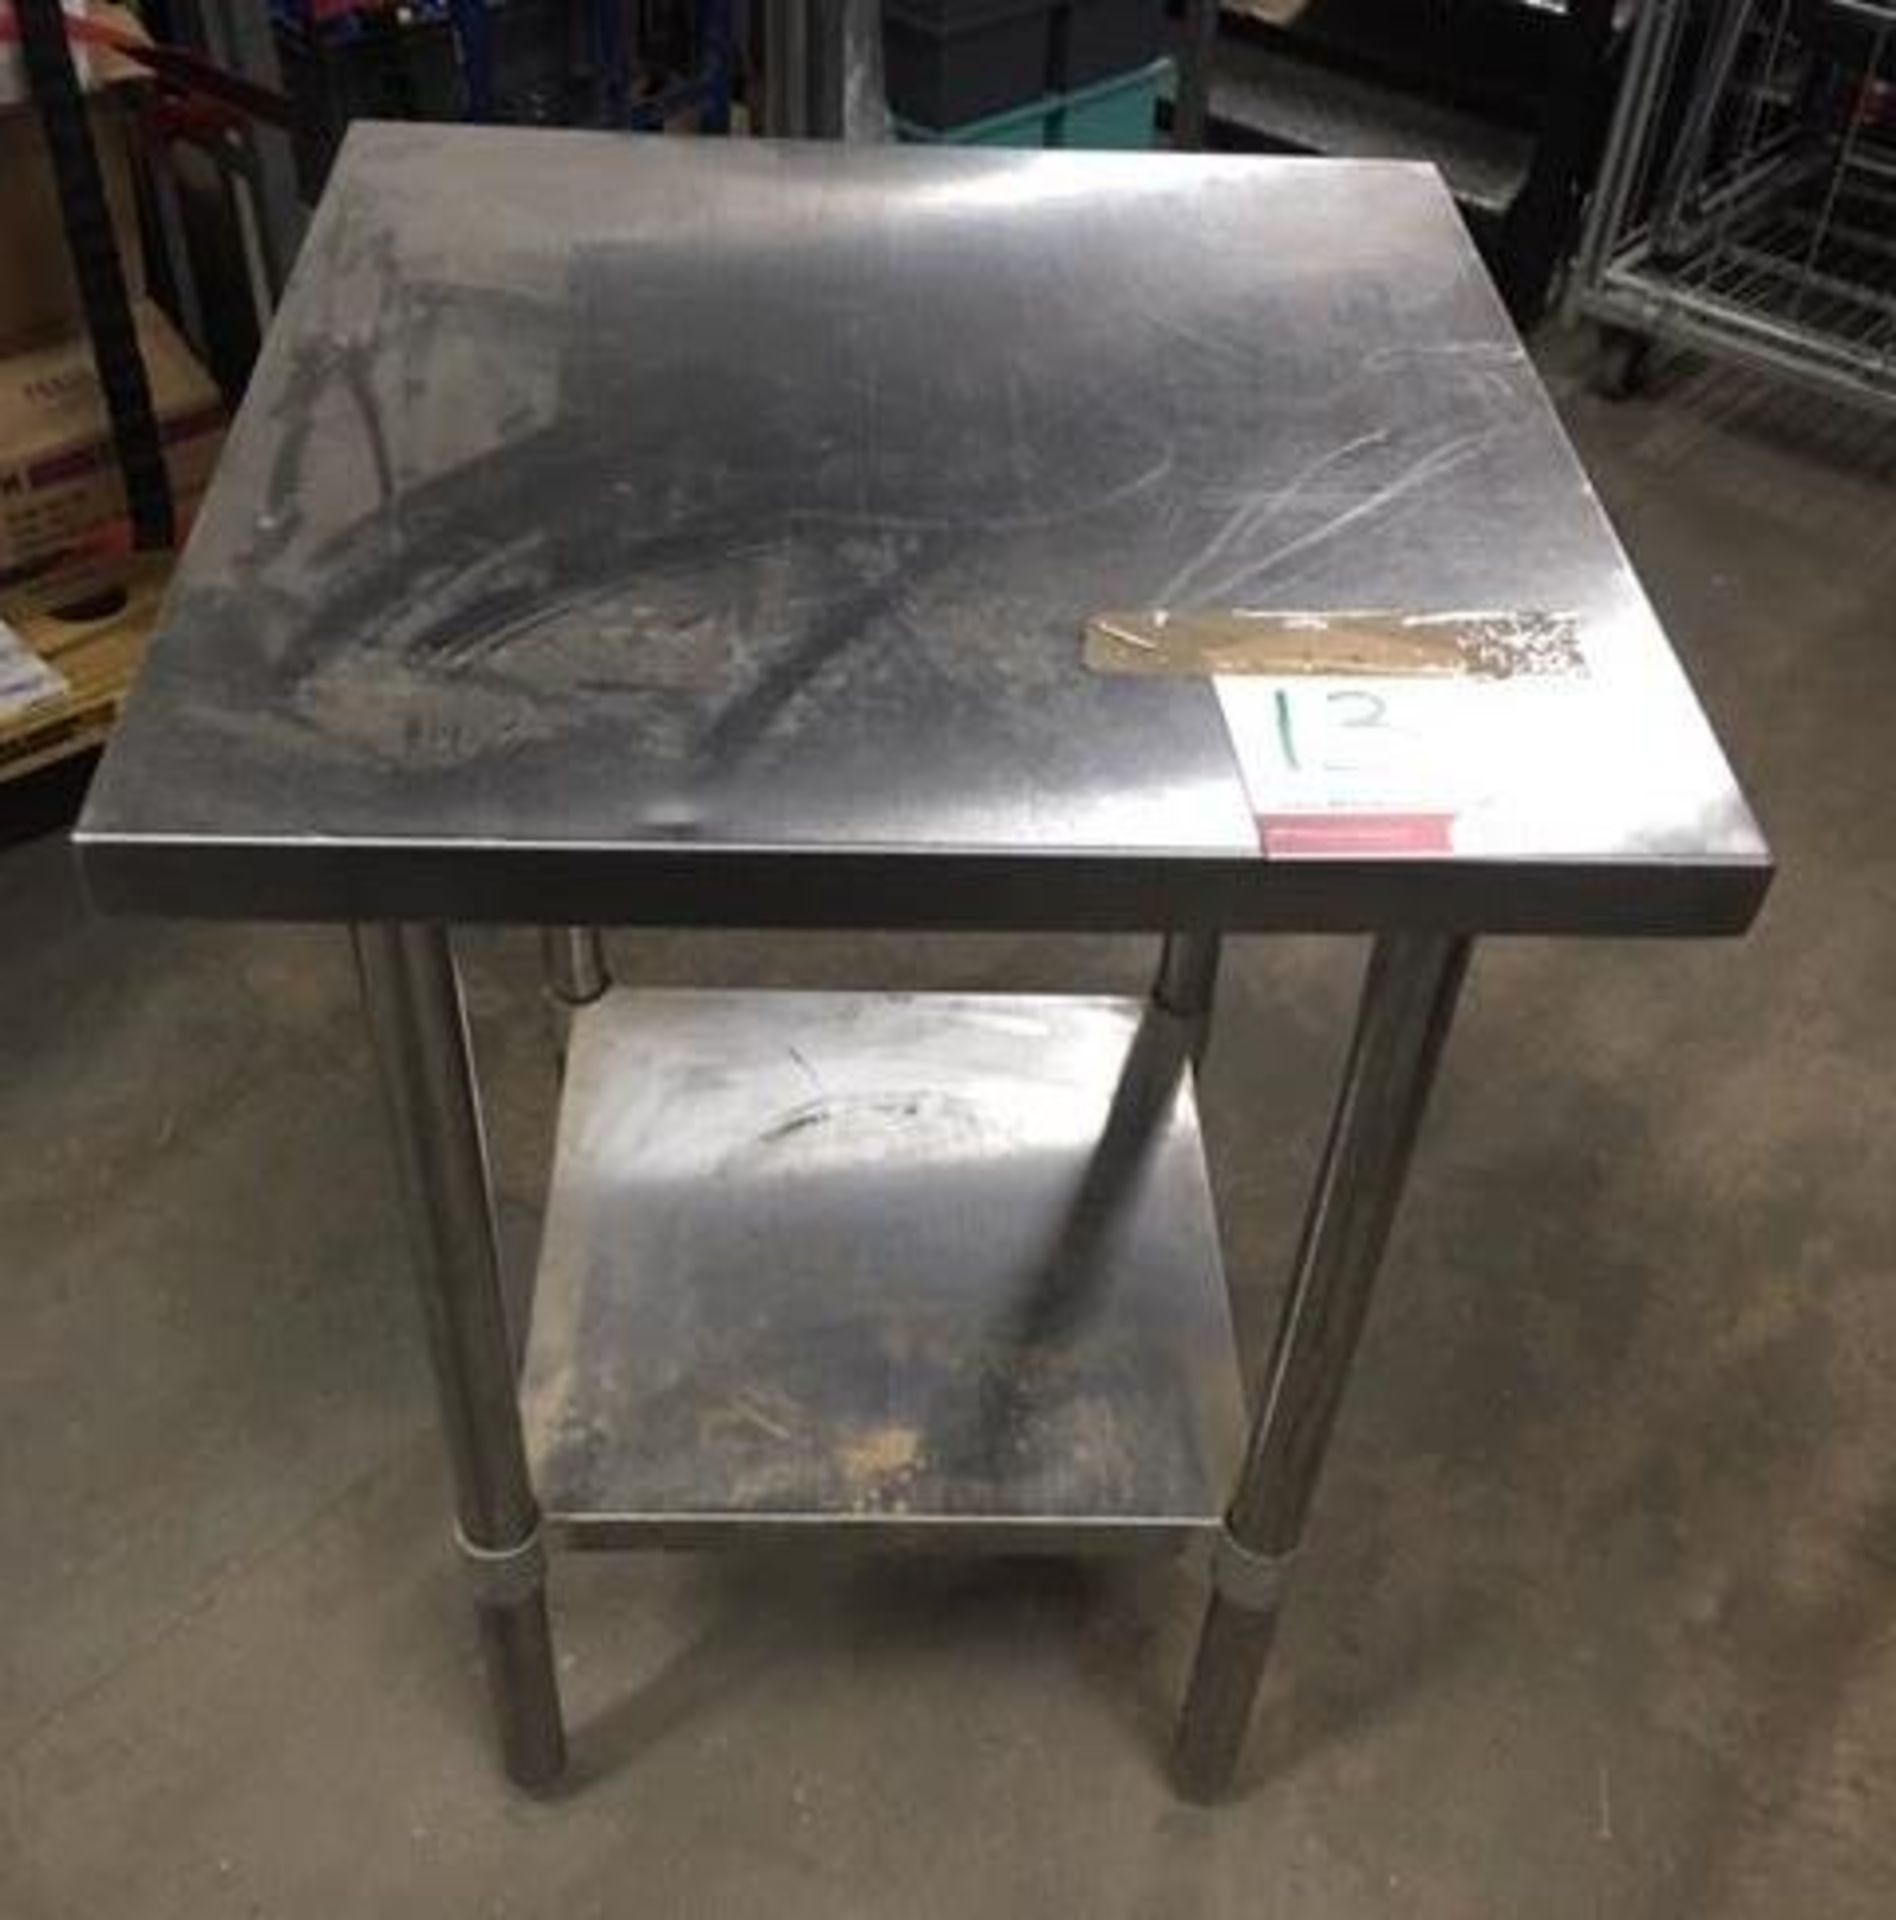 Stainless Steel Preparation Table w/ Undershelf - Image 2 of 2